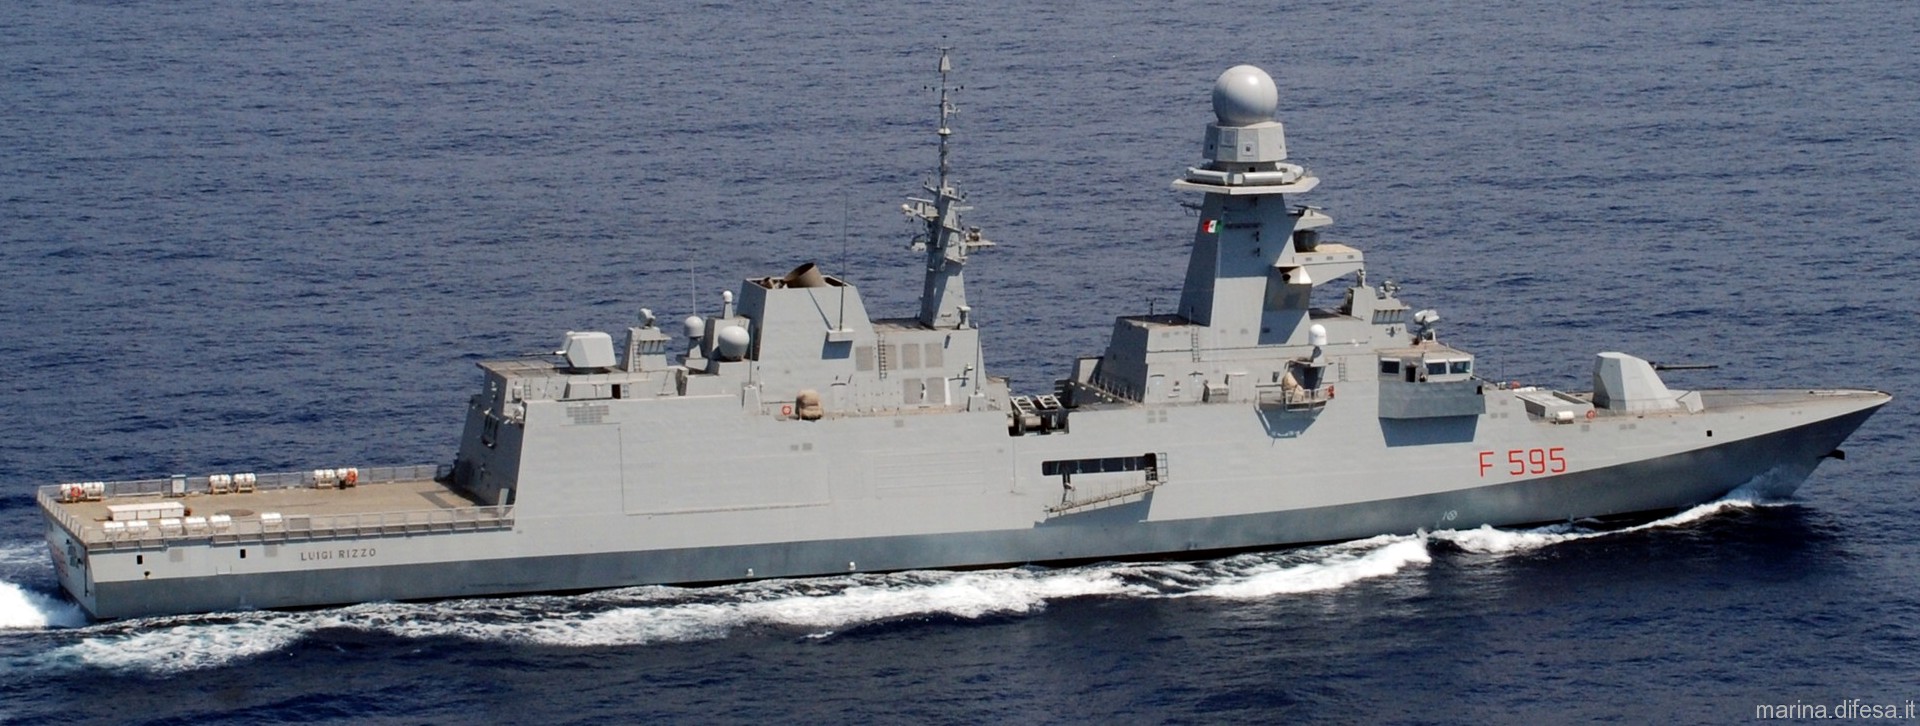 f-595 luigi rizzo its nave bergamini fremm class guided missile frigate italian navy marina militare 06